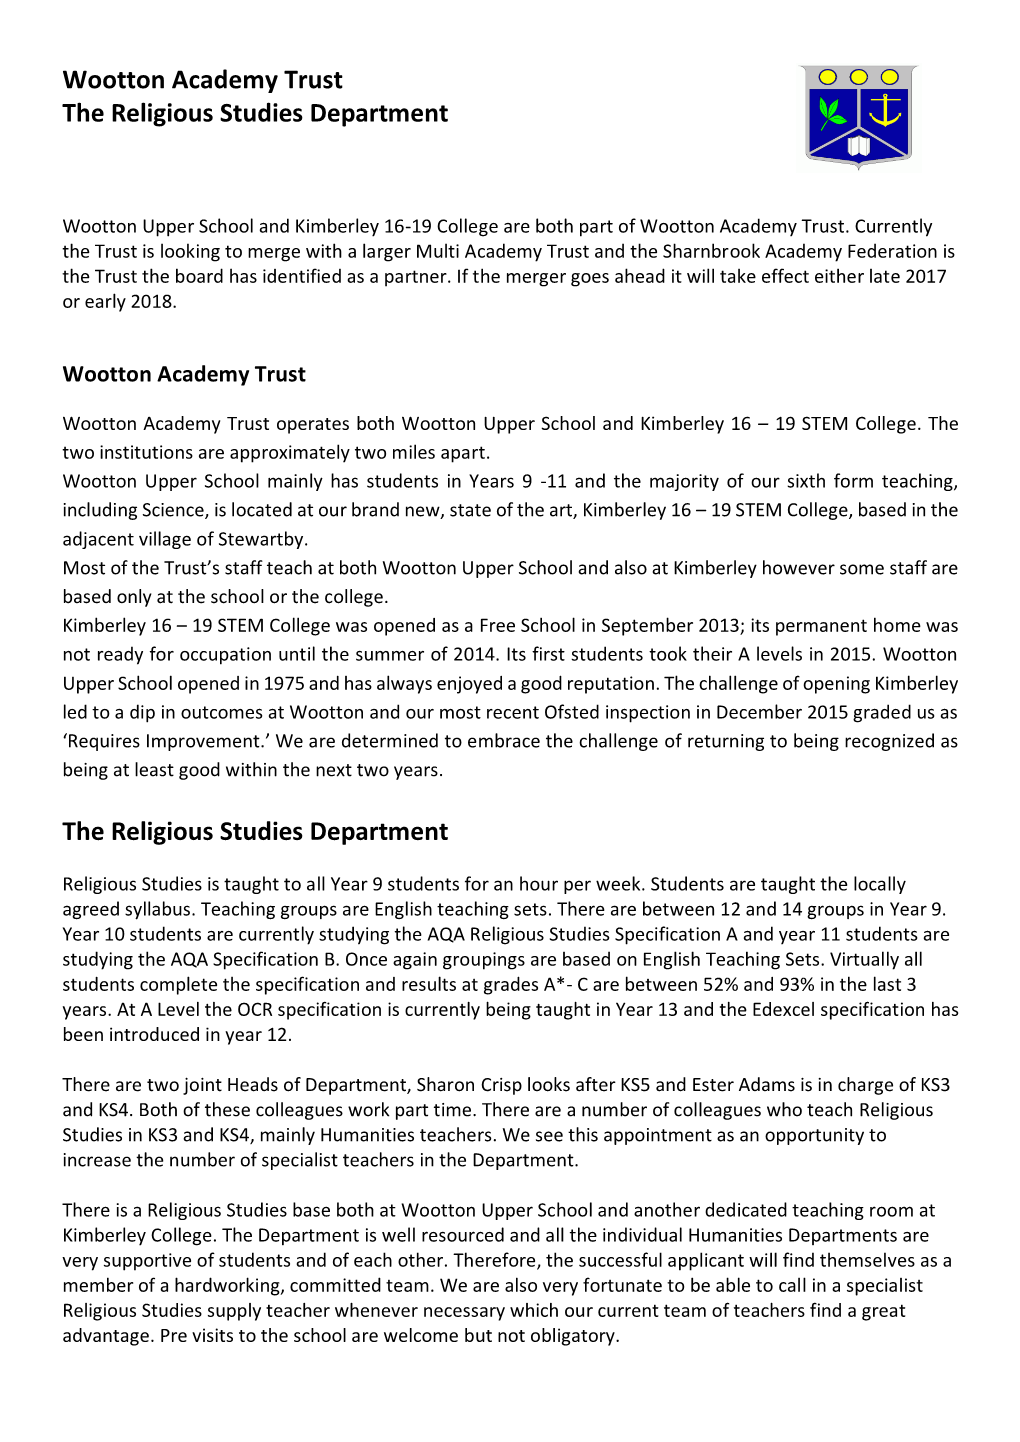 Wootton Academy Trust the Religious Studies Department the Religious